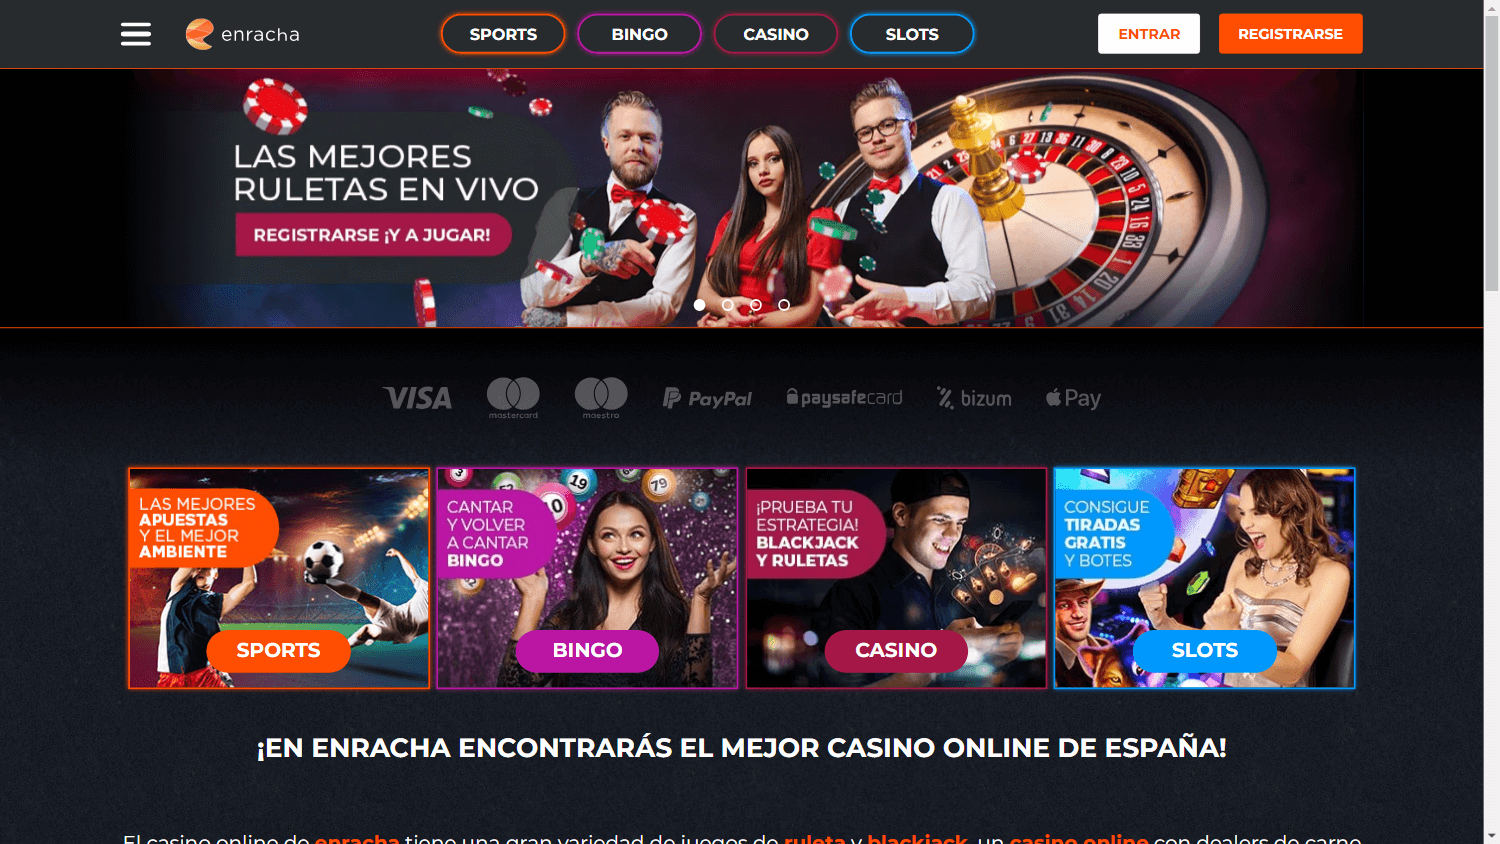 enracha_casino_homepage_desktop